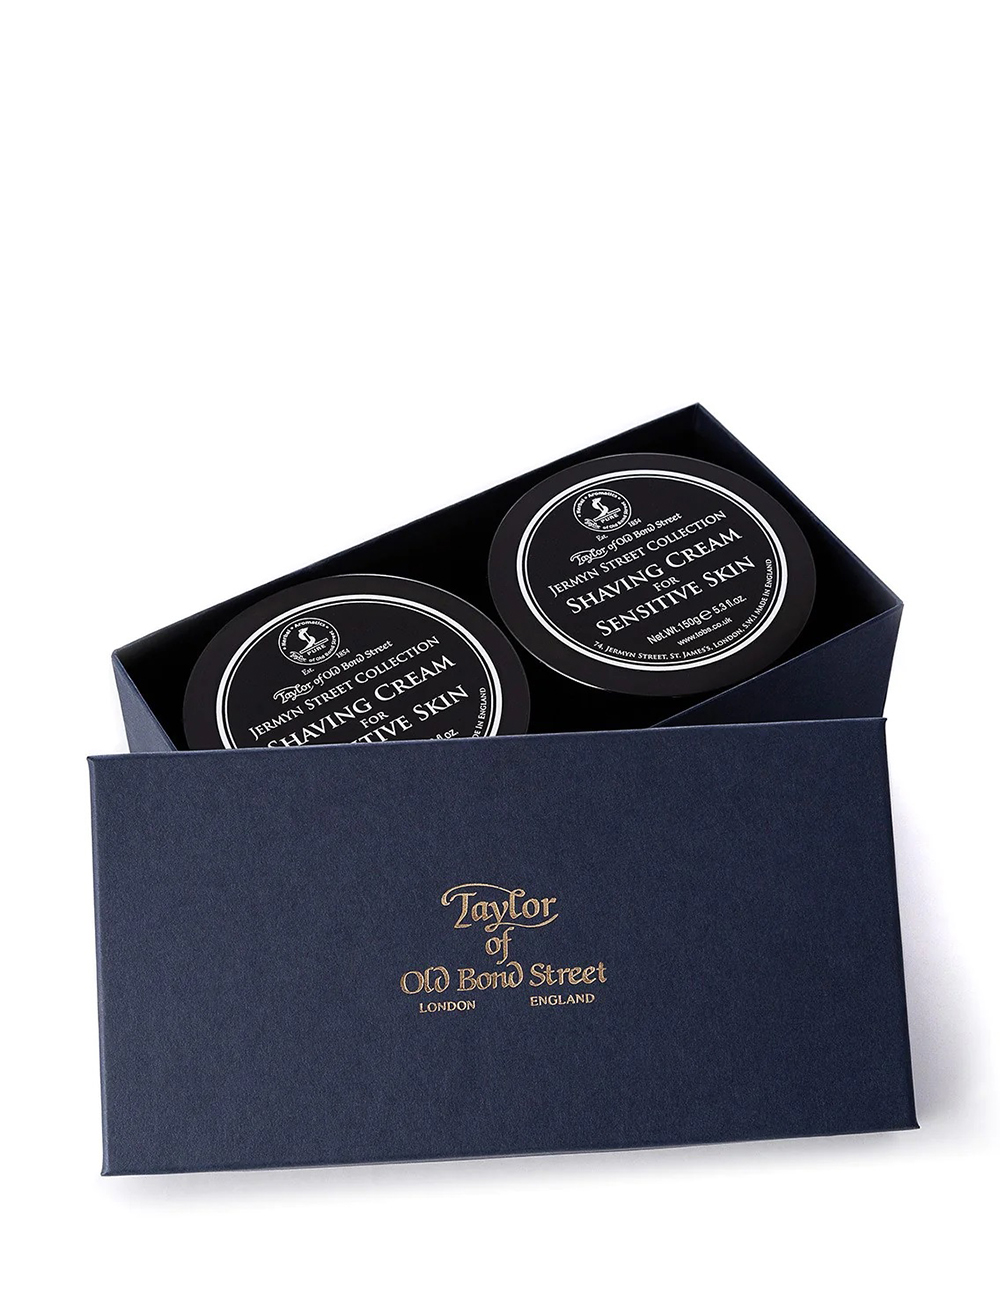 Taylor Of Old Bond Street Jermyn Street Shaving Cream Gift Box 01022